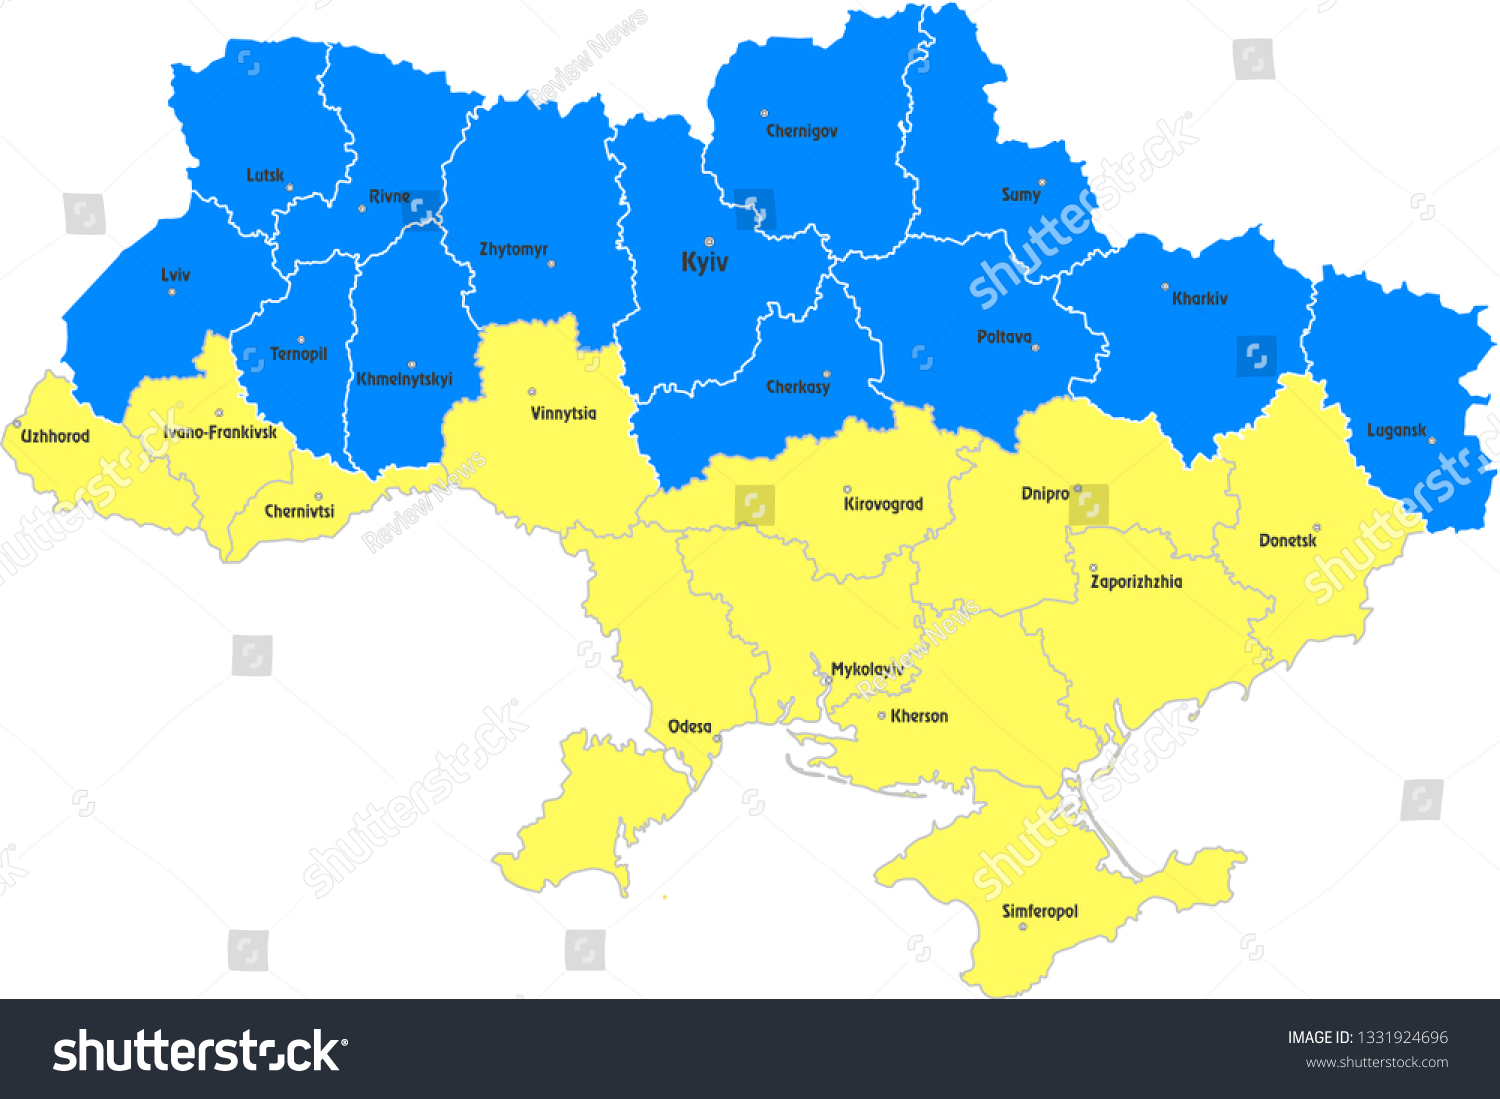 detailed-map-ukraine-regions-states-cities-arkivvektor-royaltyfri